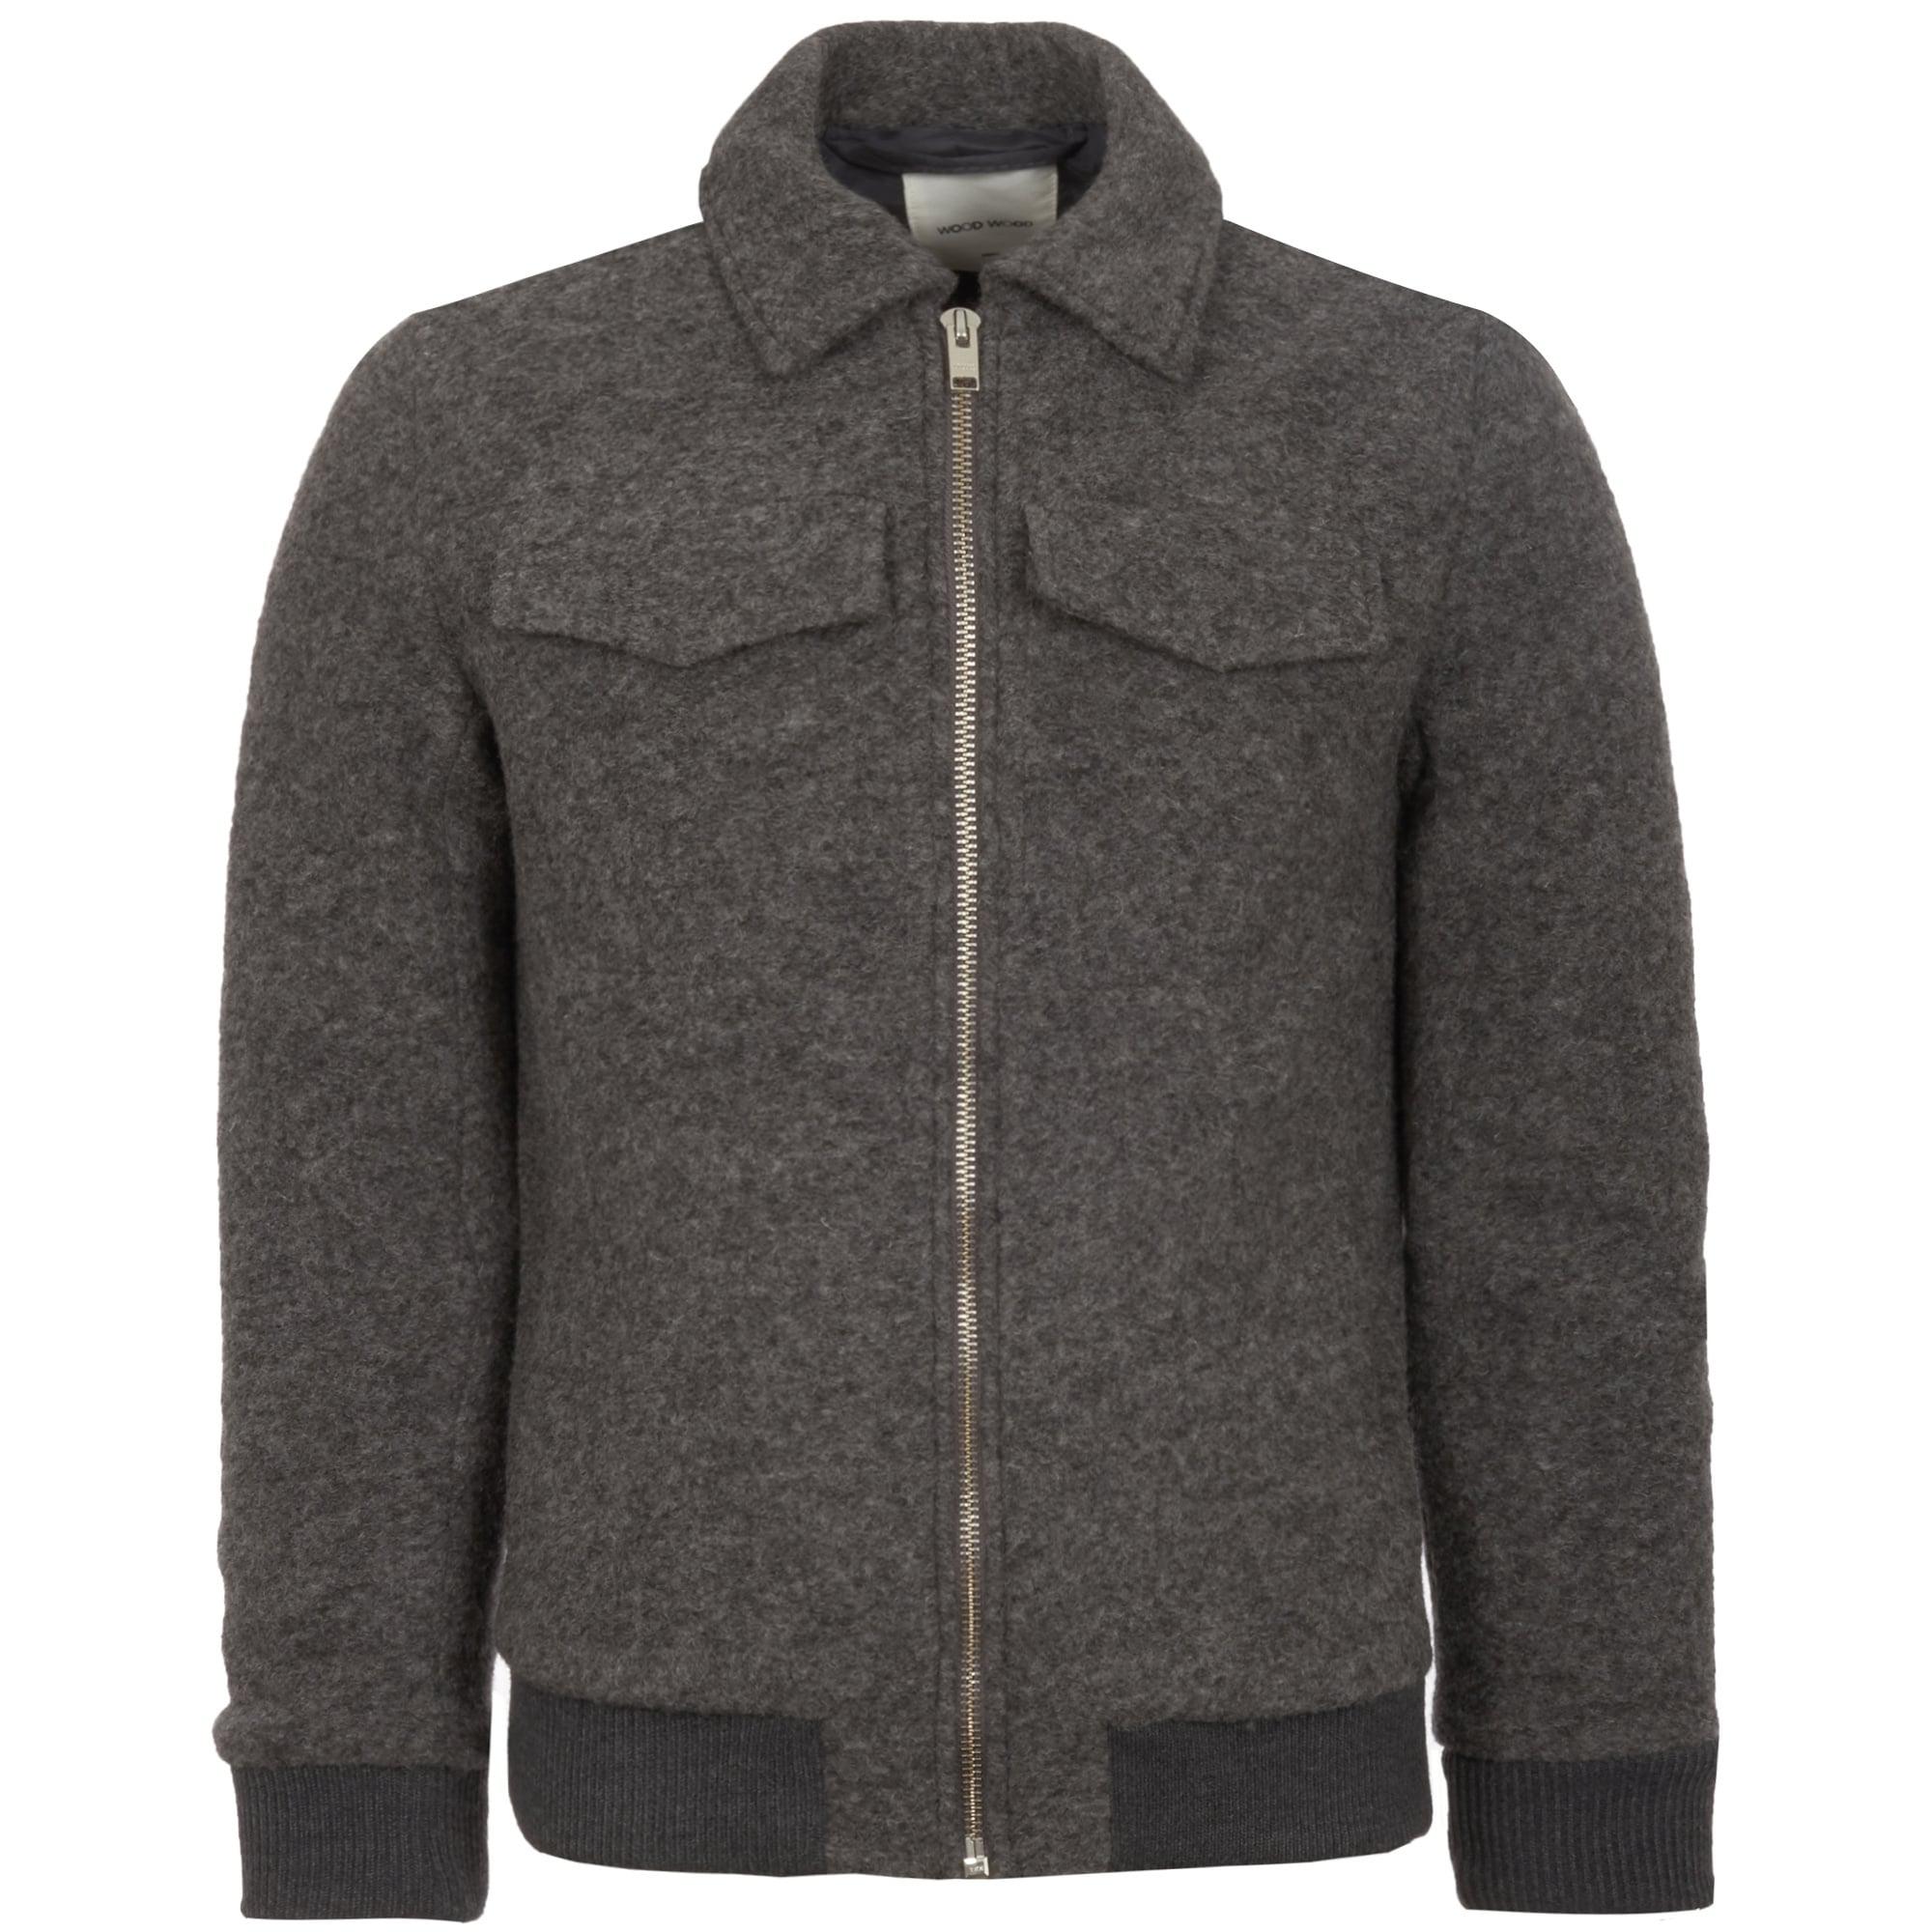 Lyst - Wood Wood Grey Melange Acton Jacket in Gray for Men